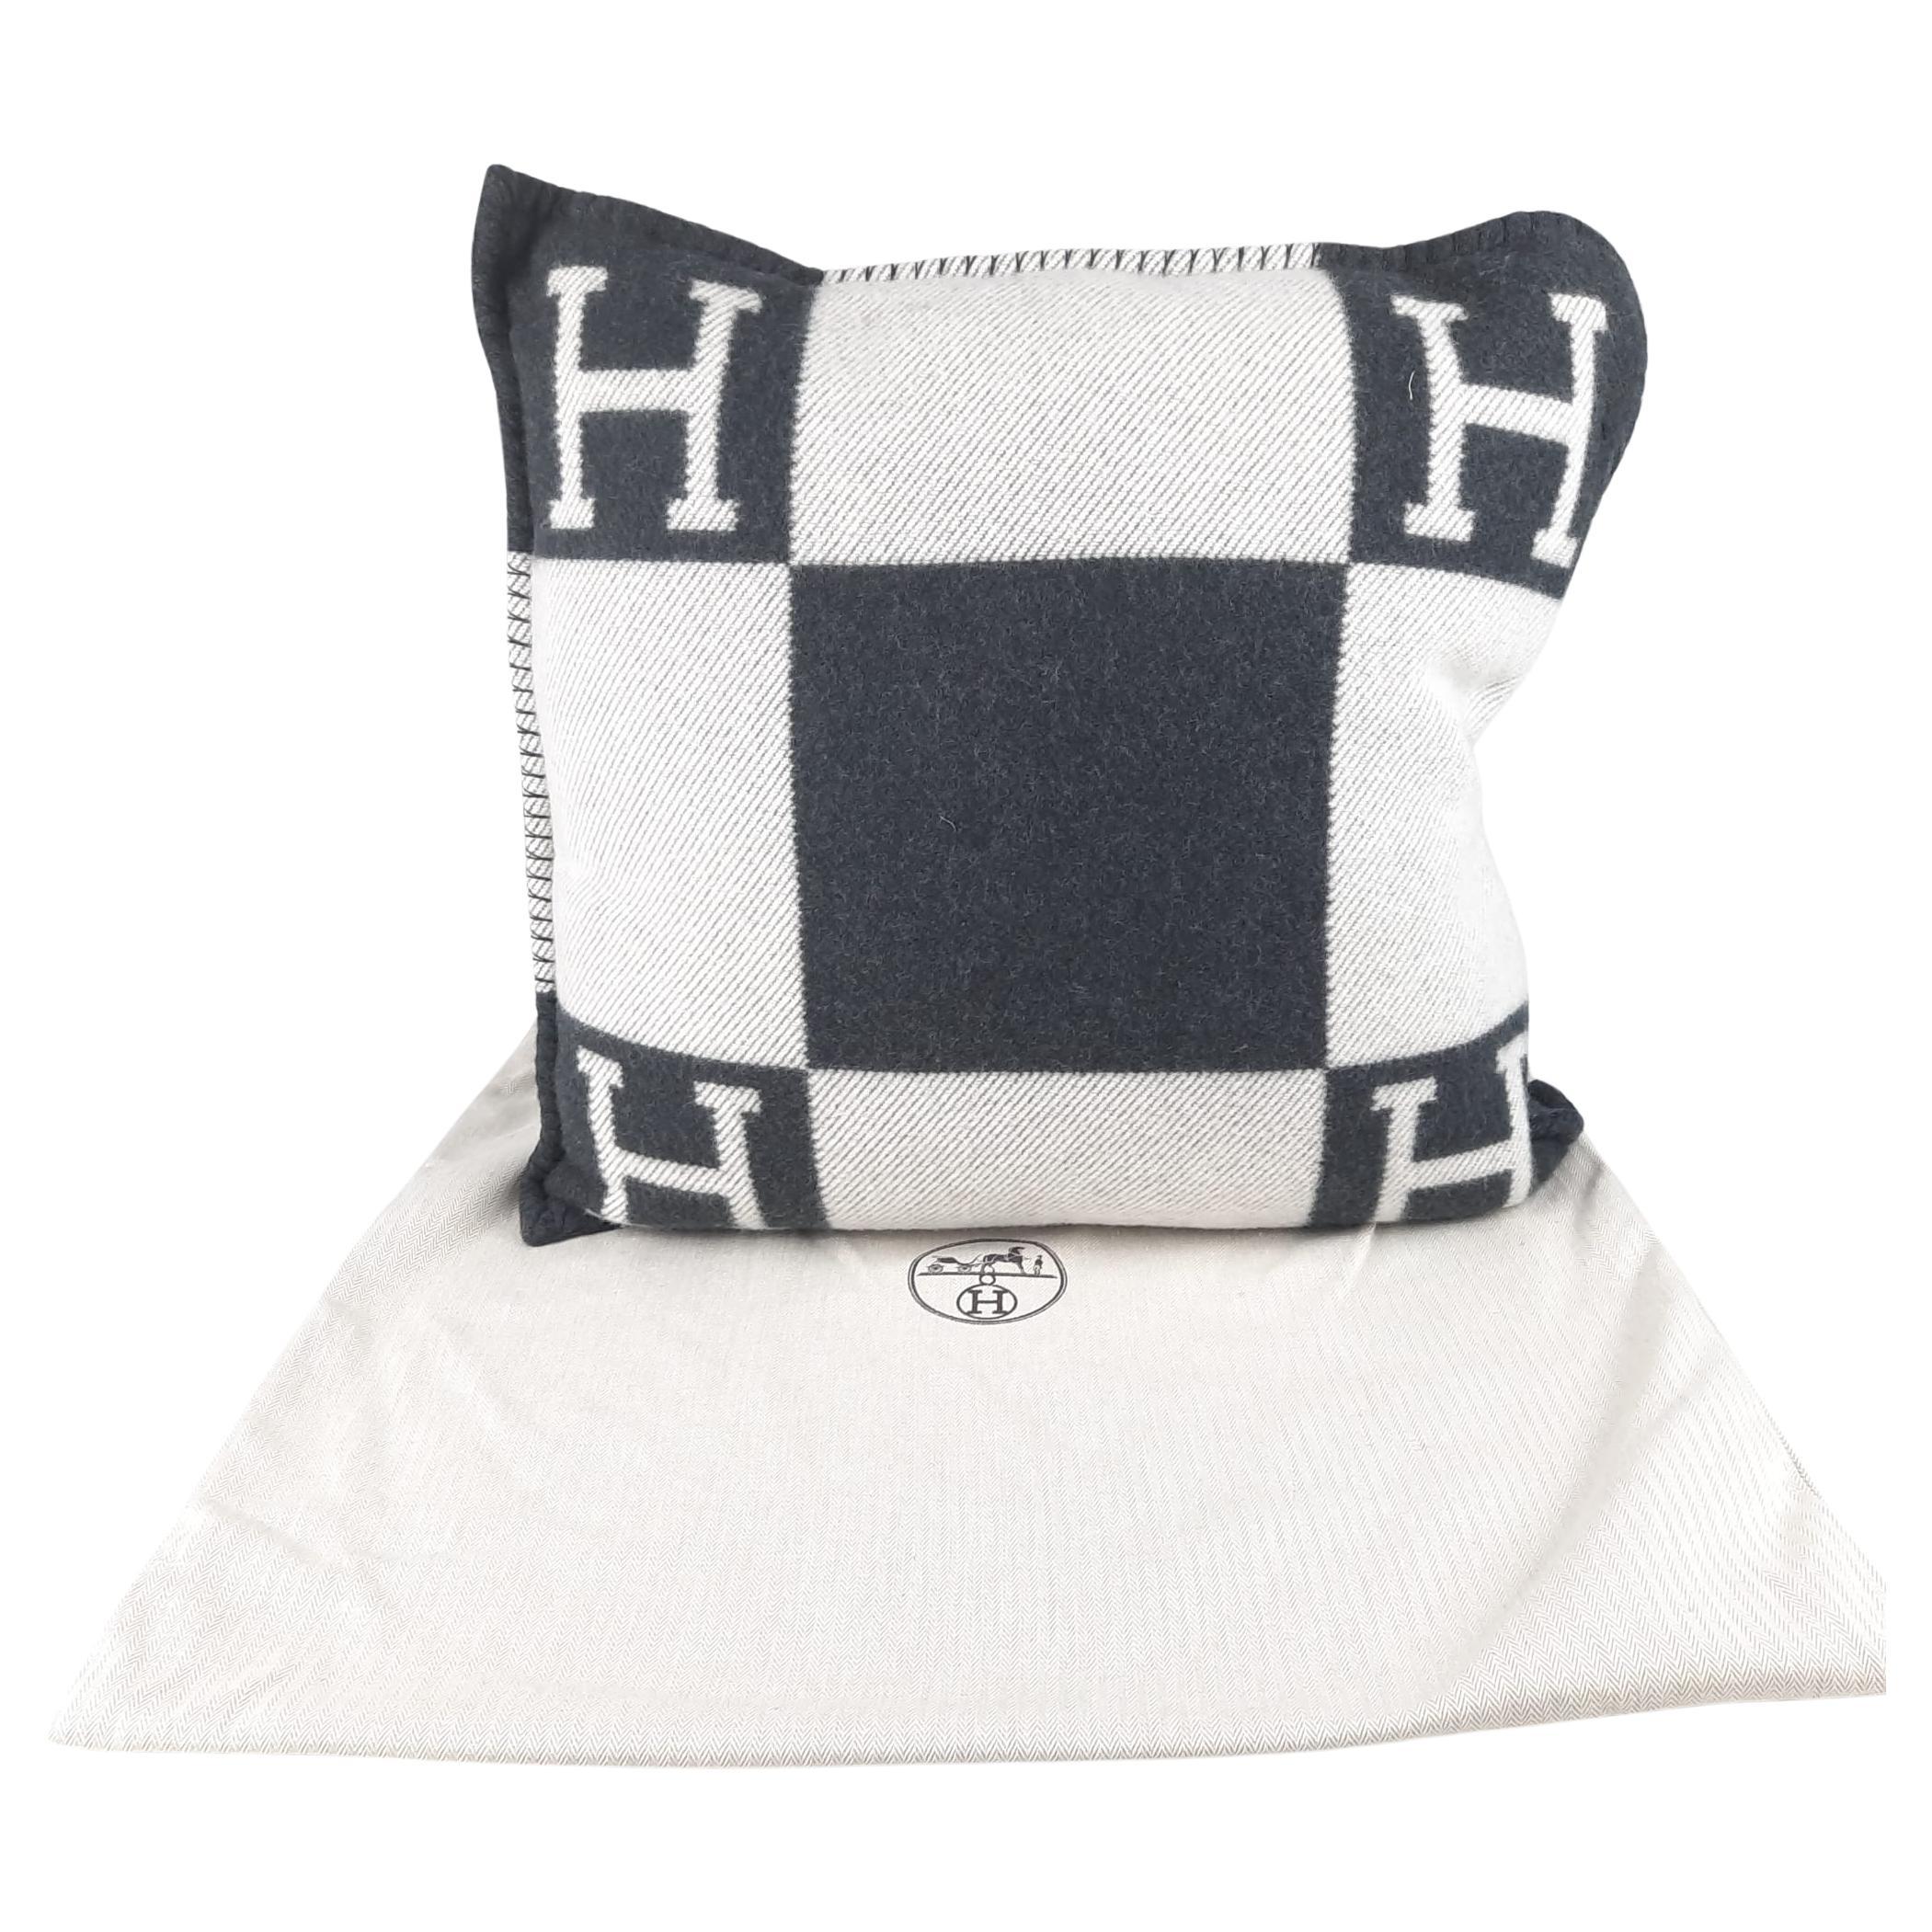 Hermes pillow avalon Ecru & Gris fonce small model For Sale